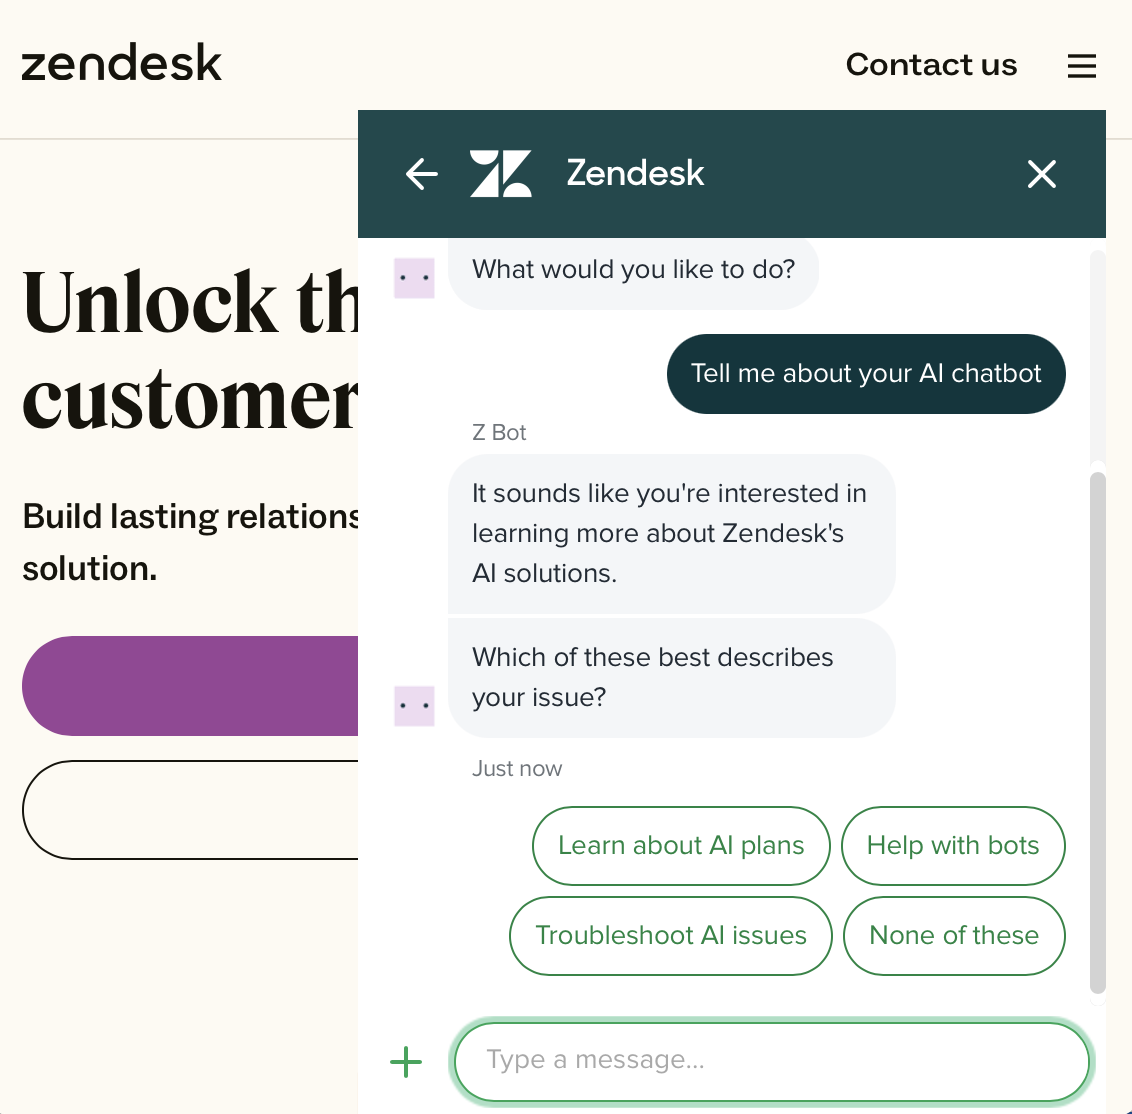 Zendesk's AI chatbot